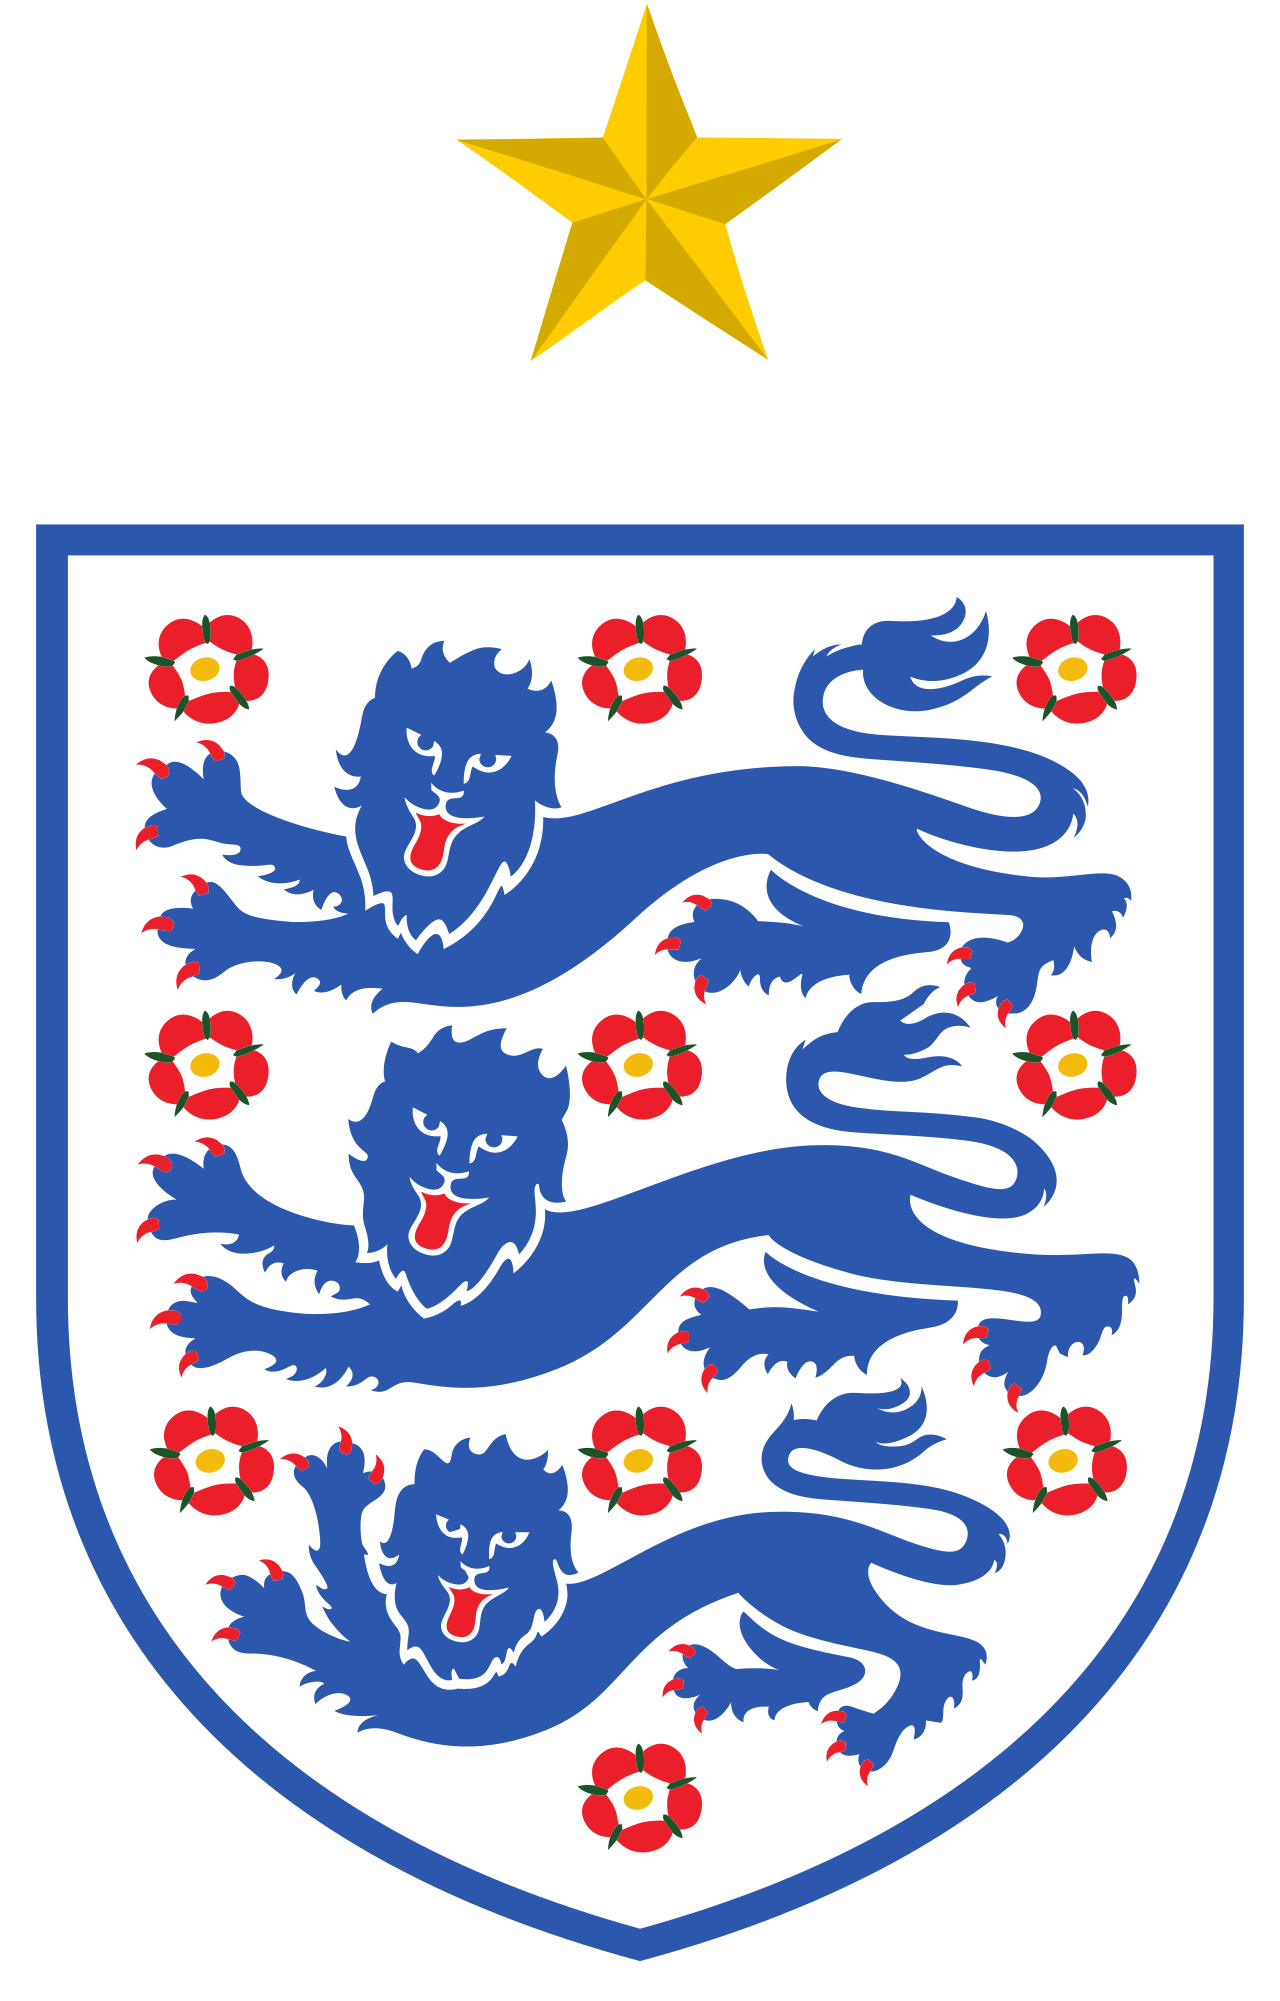 England national football team. England national football team, England football team, National football teams